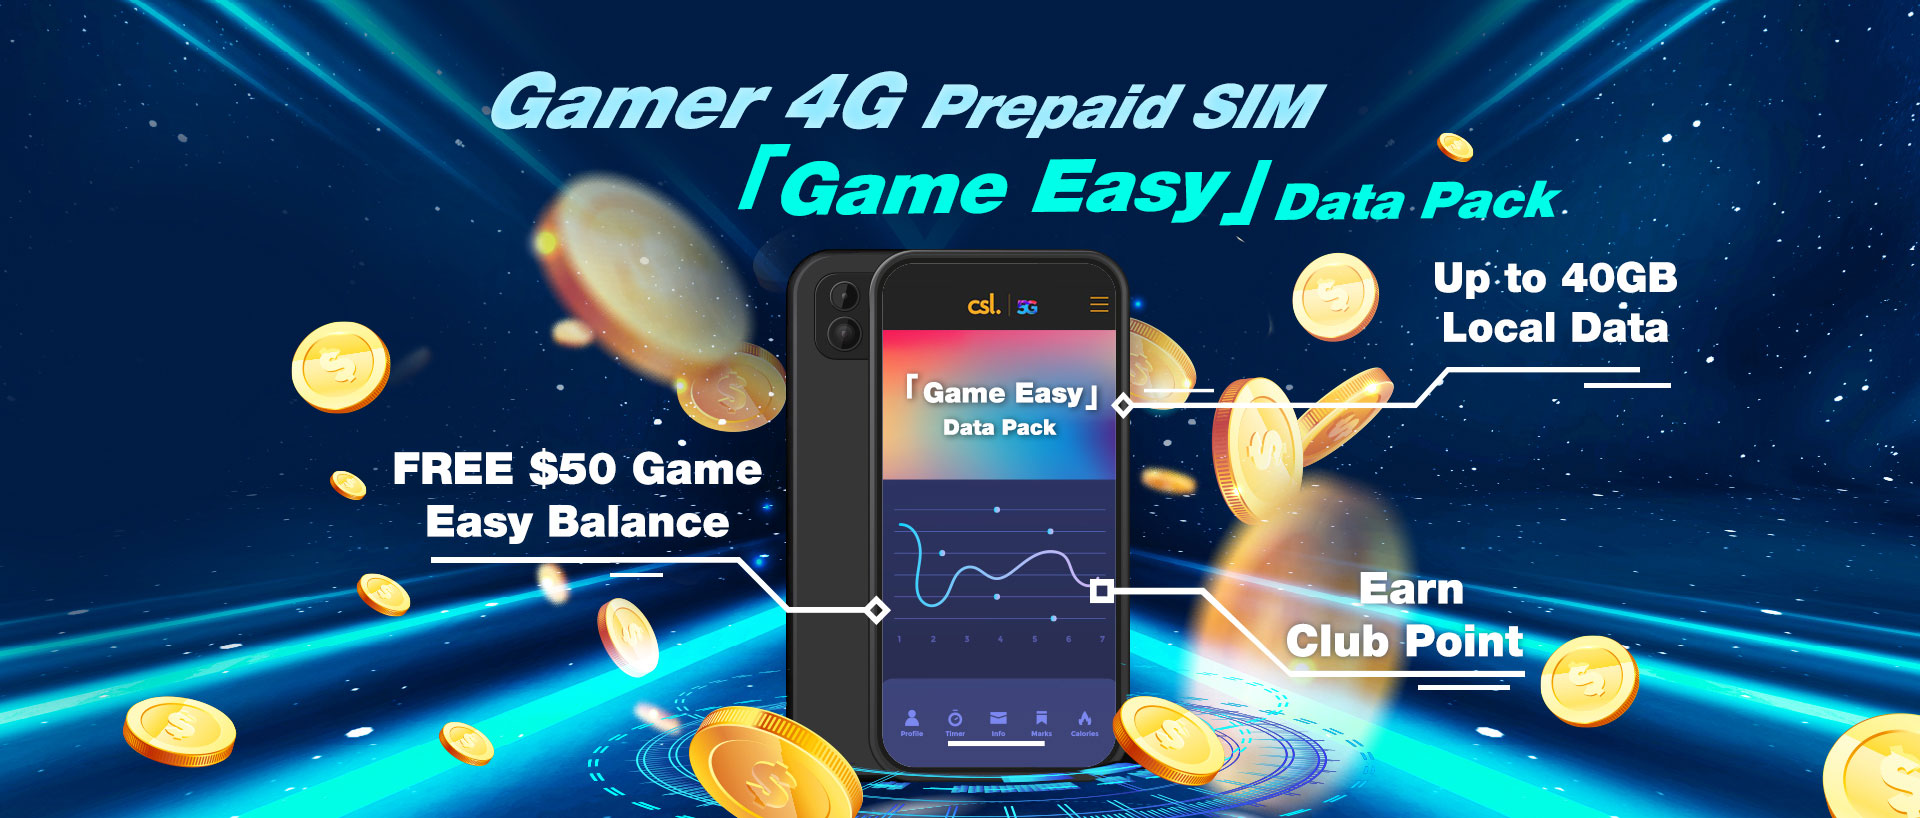 Gamer 4G Prepaid SIM -「Game Easy」Data Pack